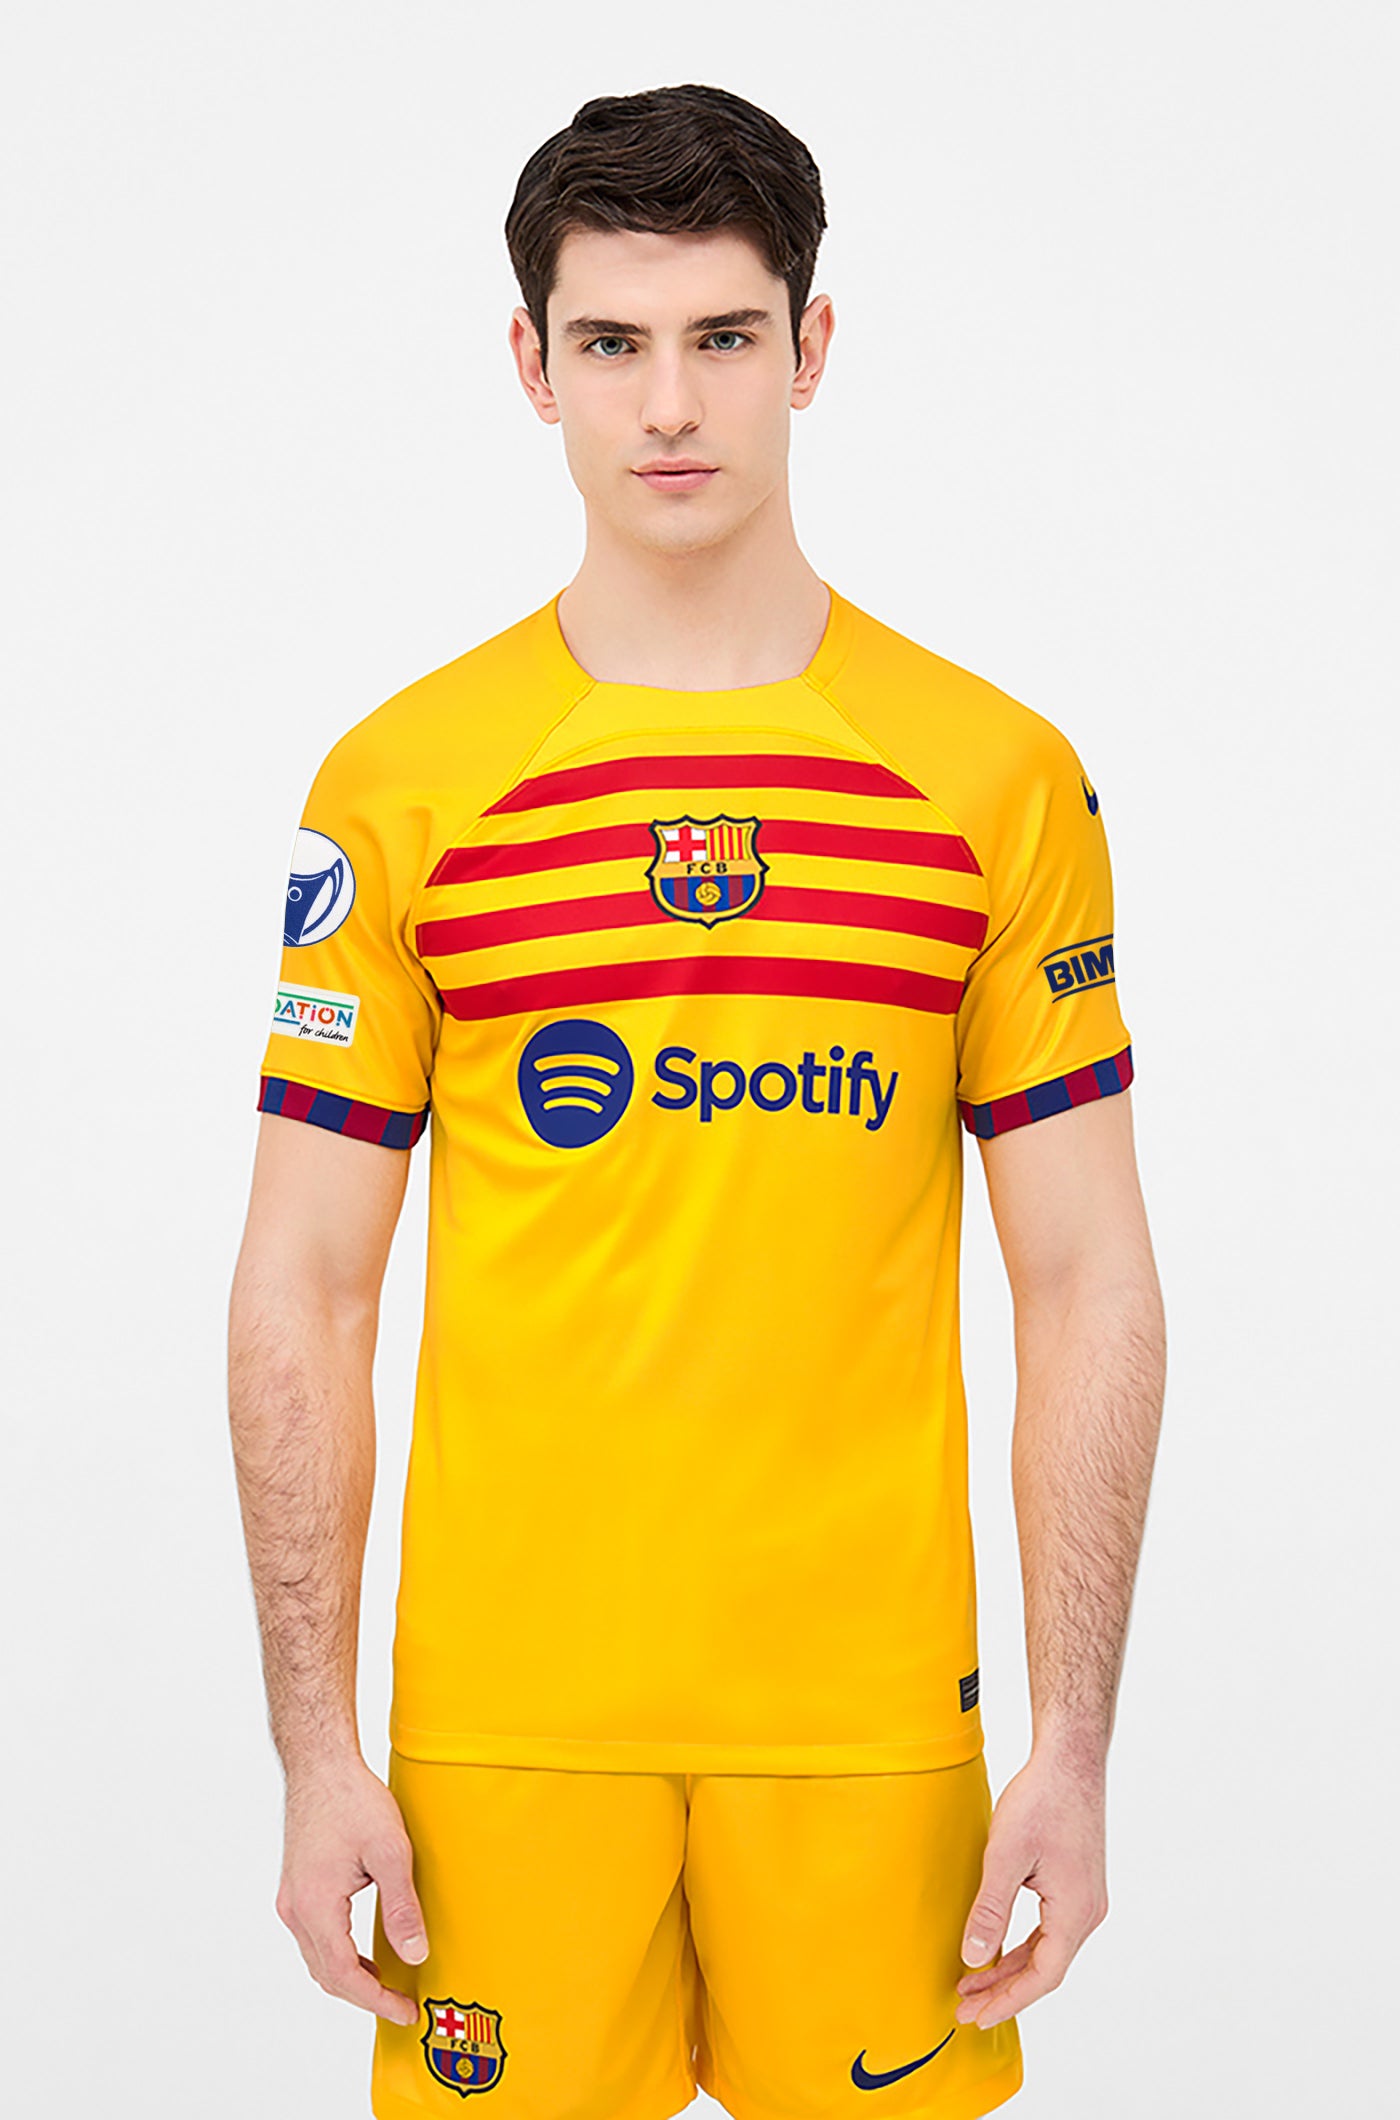 UWCL FC Barcelona fourth shirt 23/24 – Men - ROLFÖ